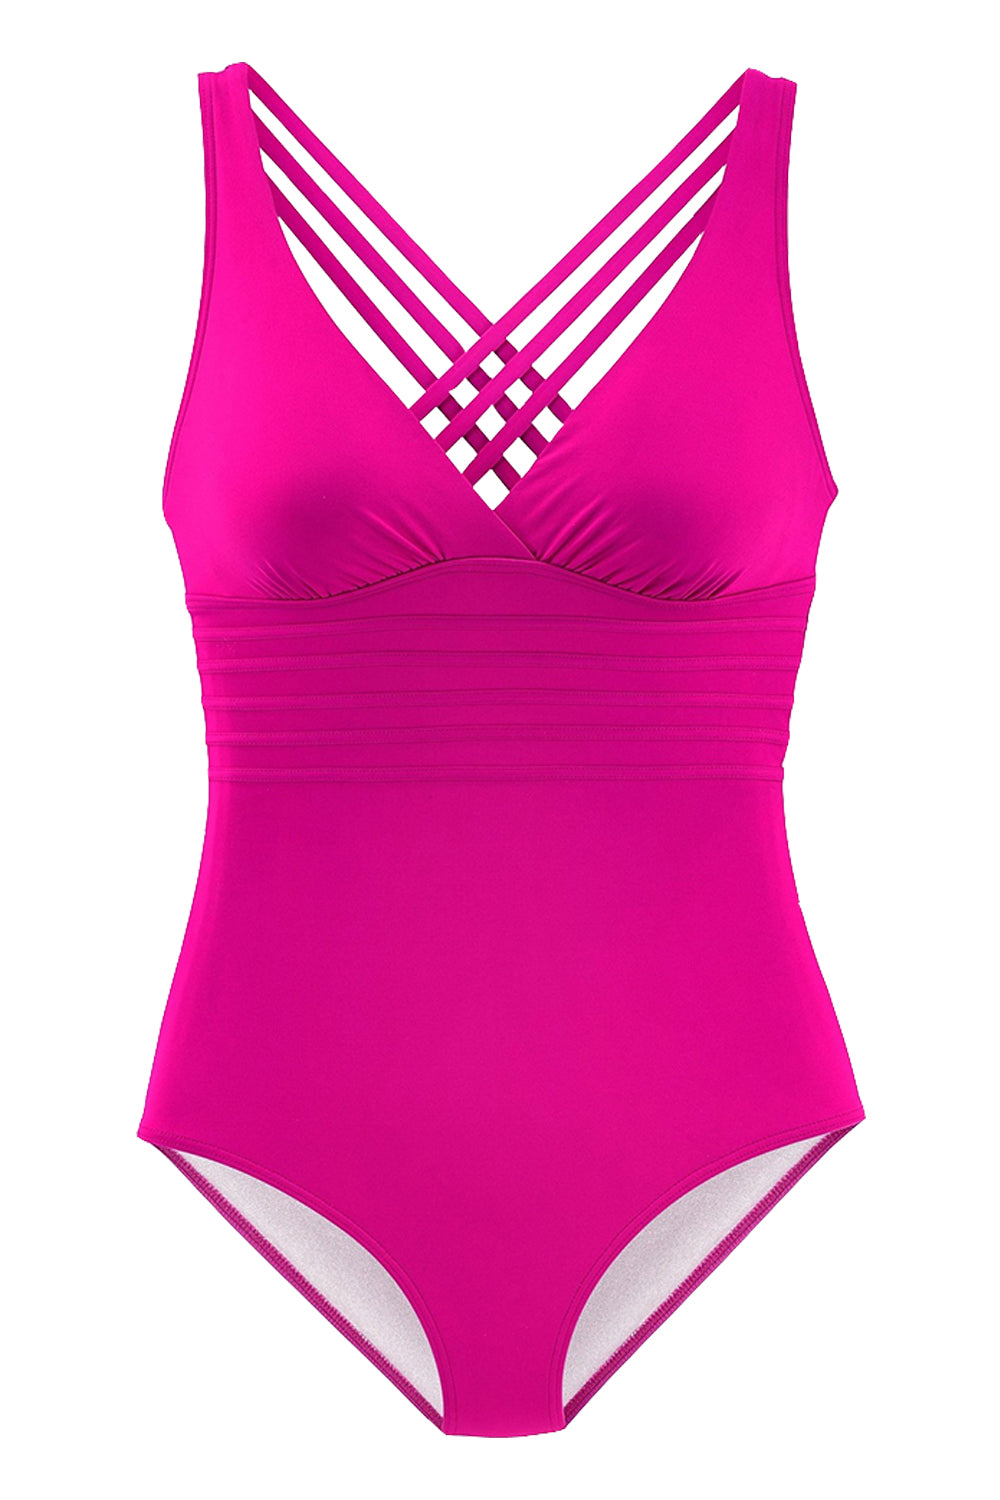 Iyasson Deep V-neckline With Cross Design One-piece Swimsuit